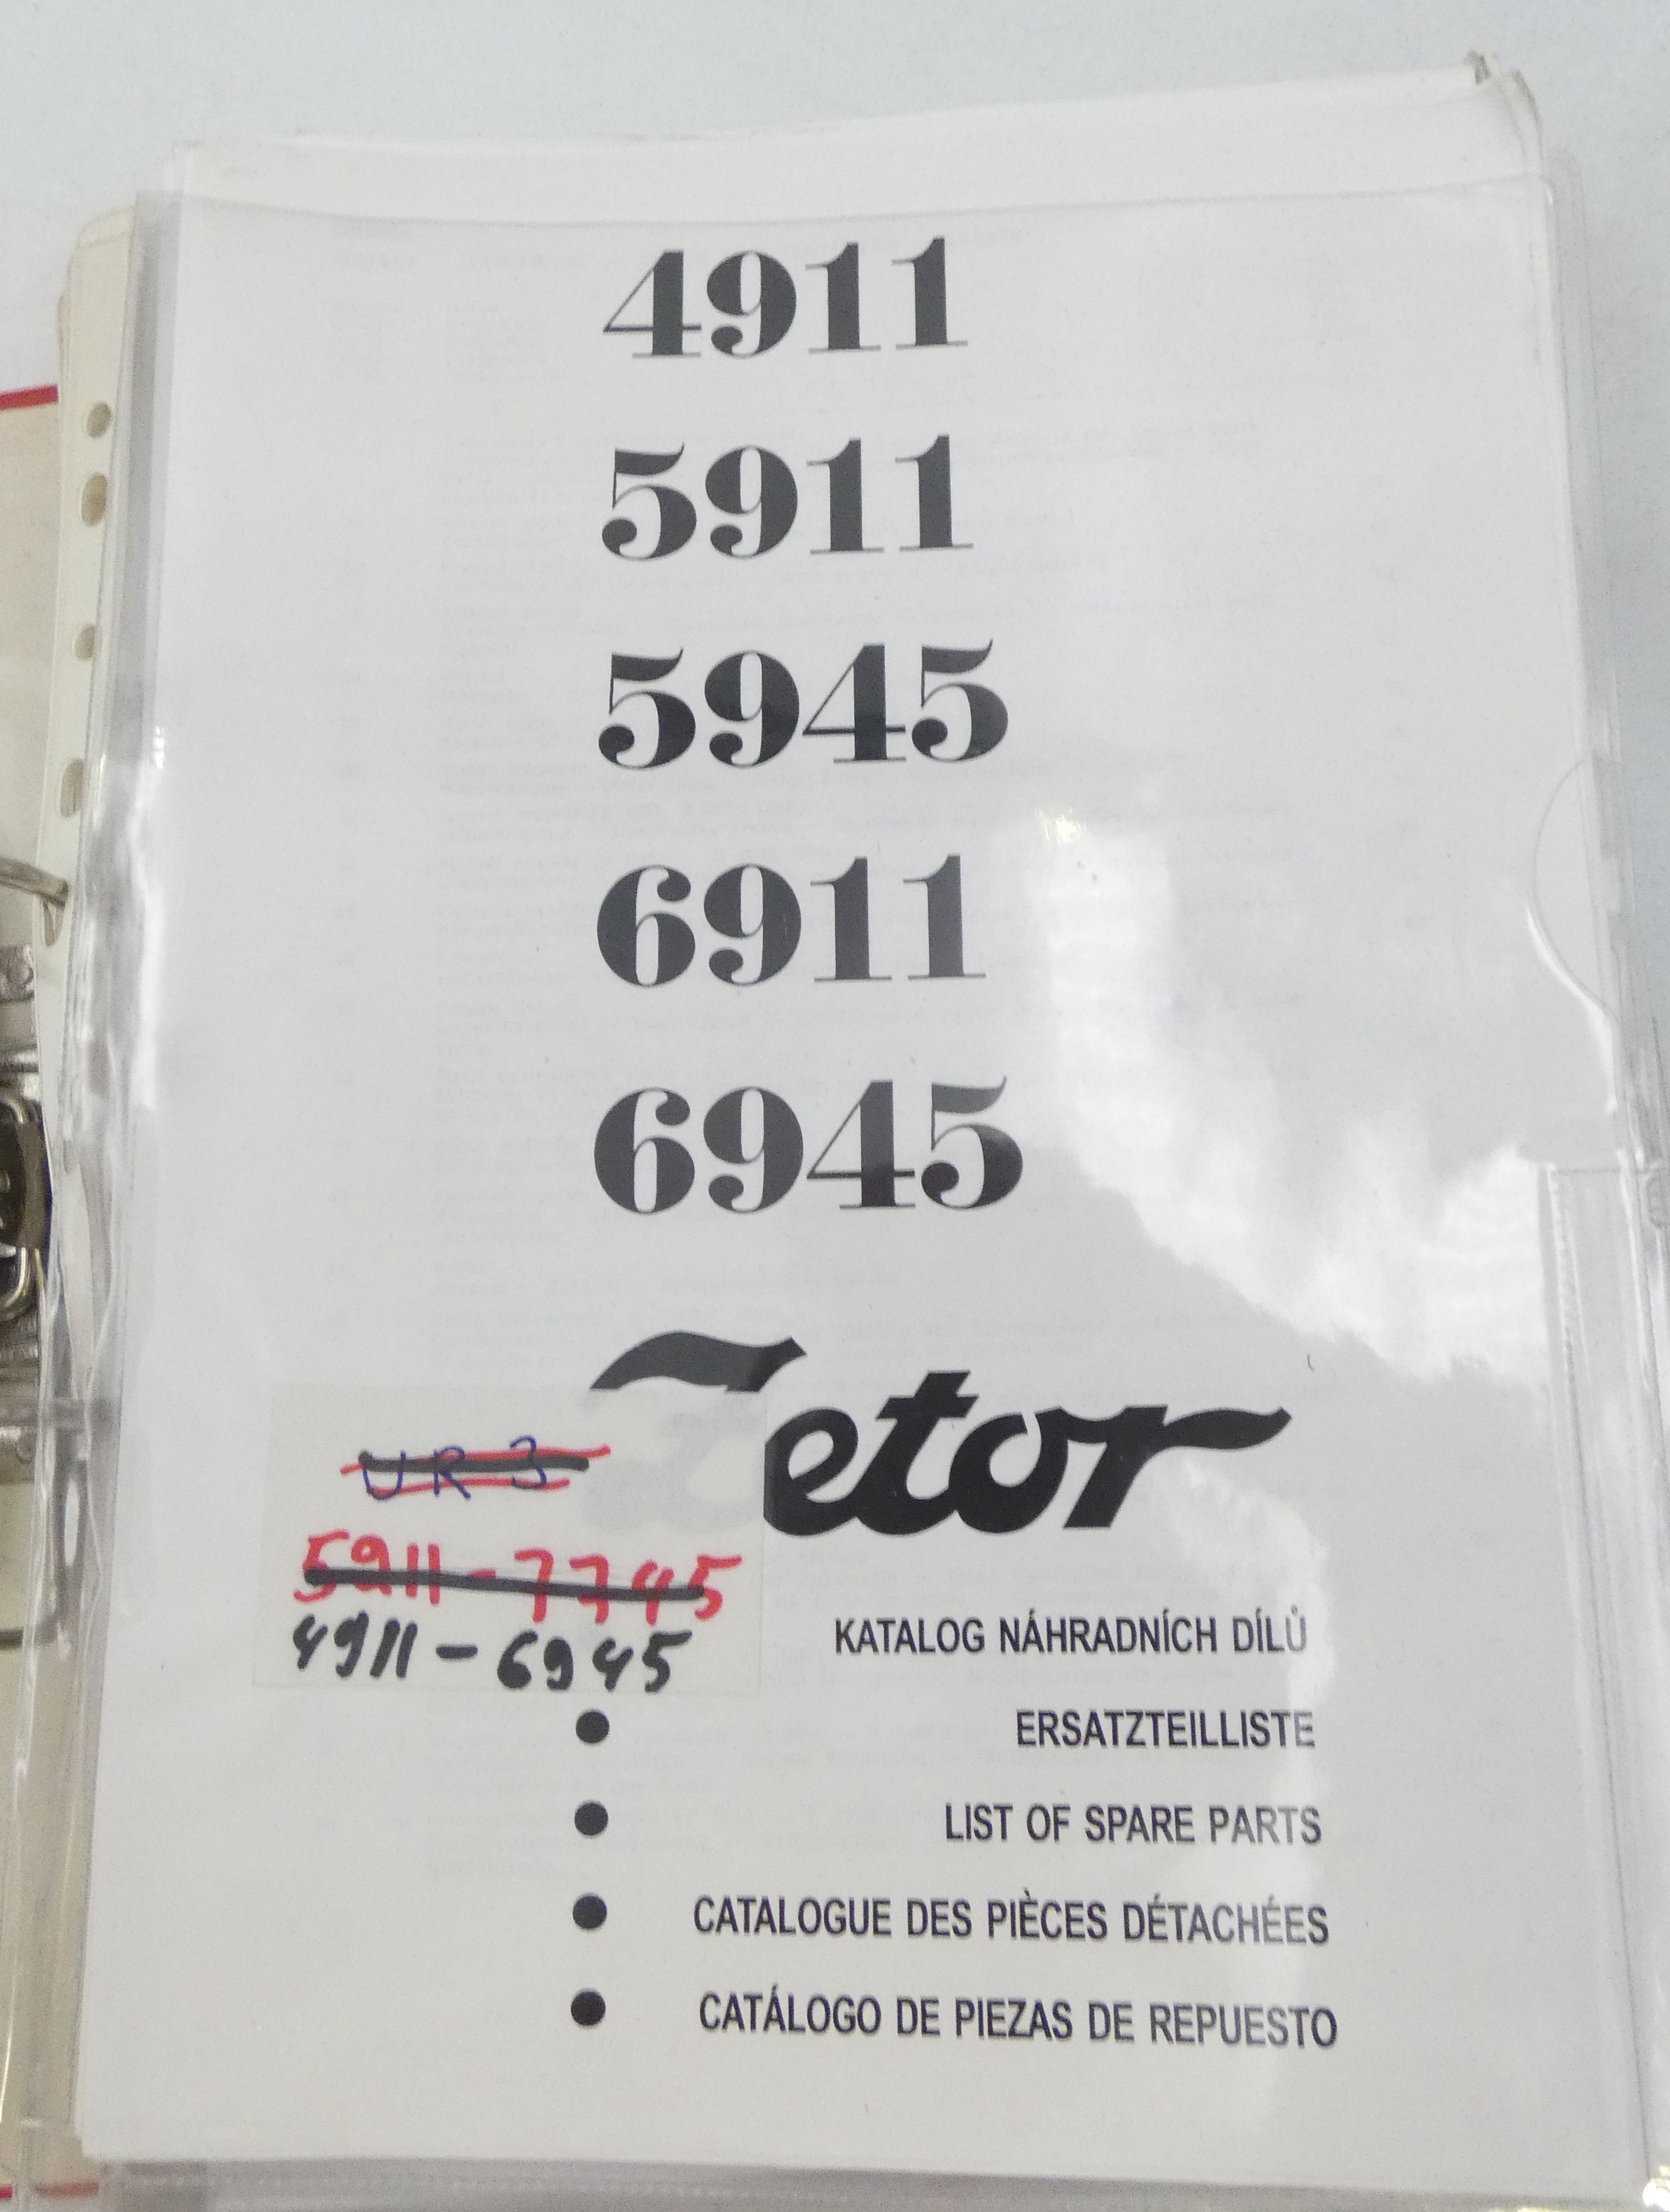 Zetor 4911, 5911, 5945, 6911, 6945 list of spare parts 